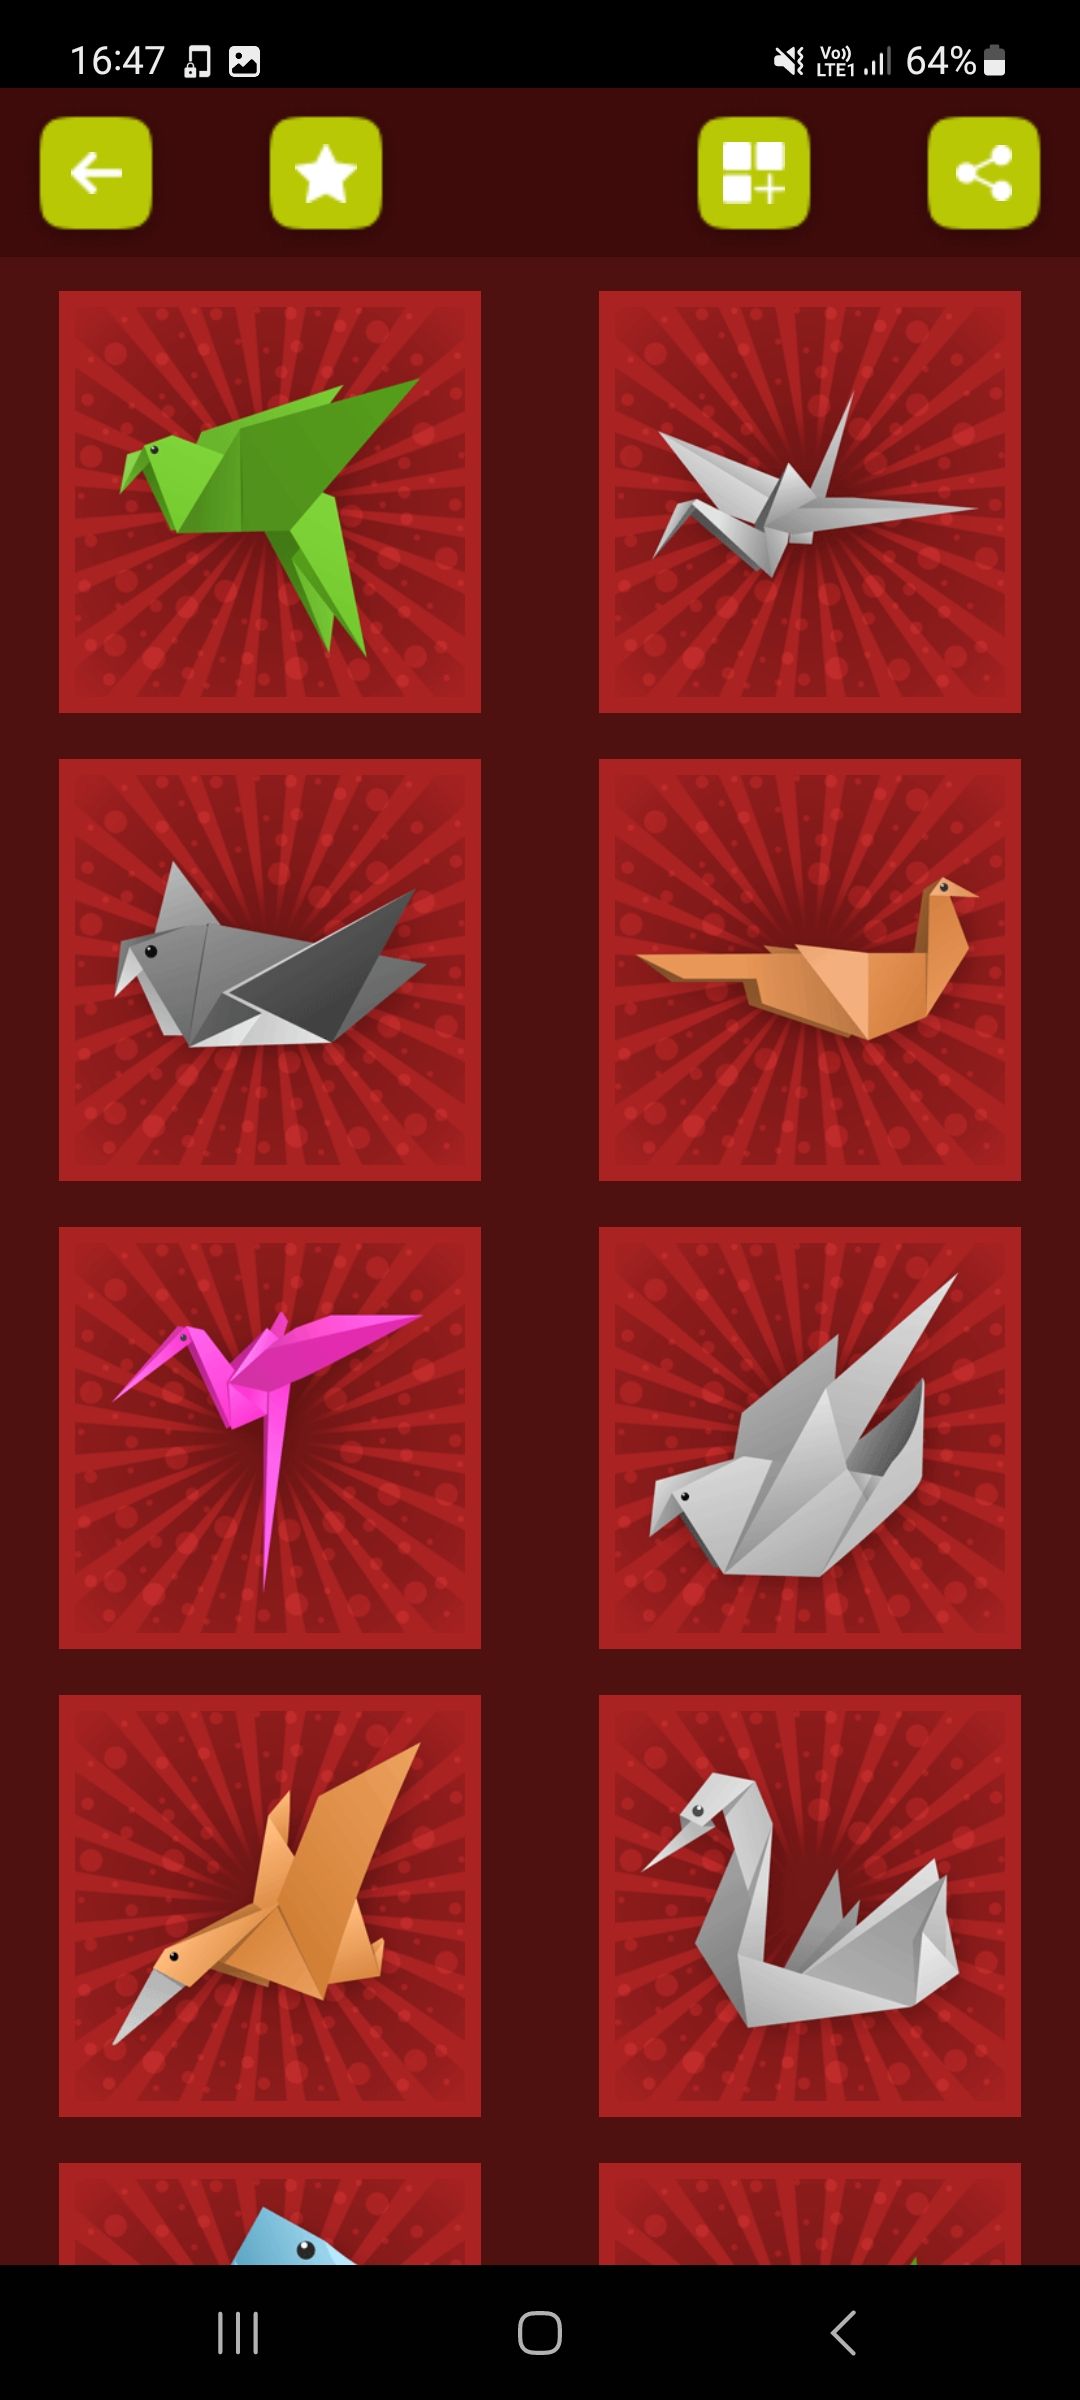 Origami birds collection